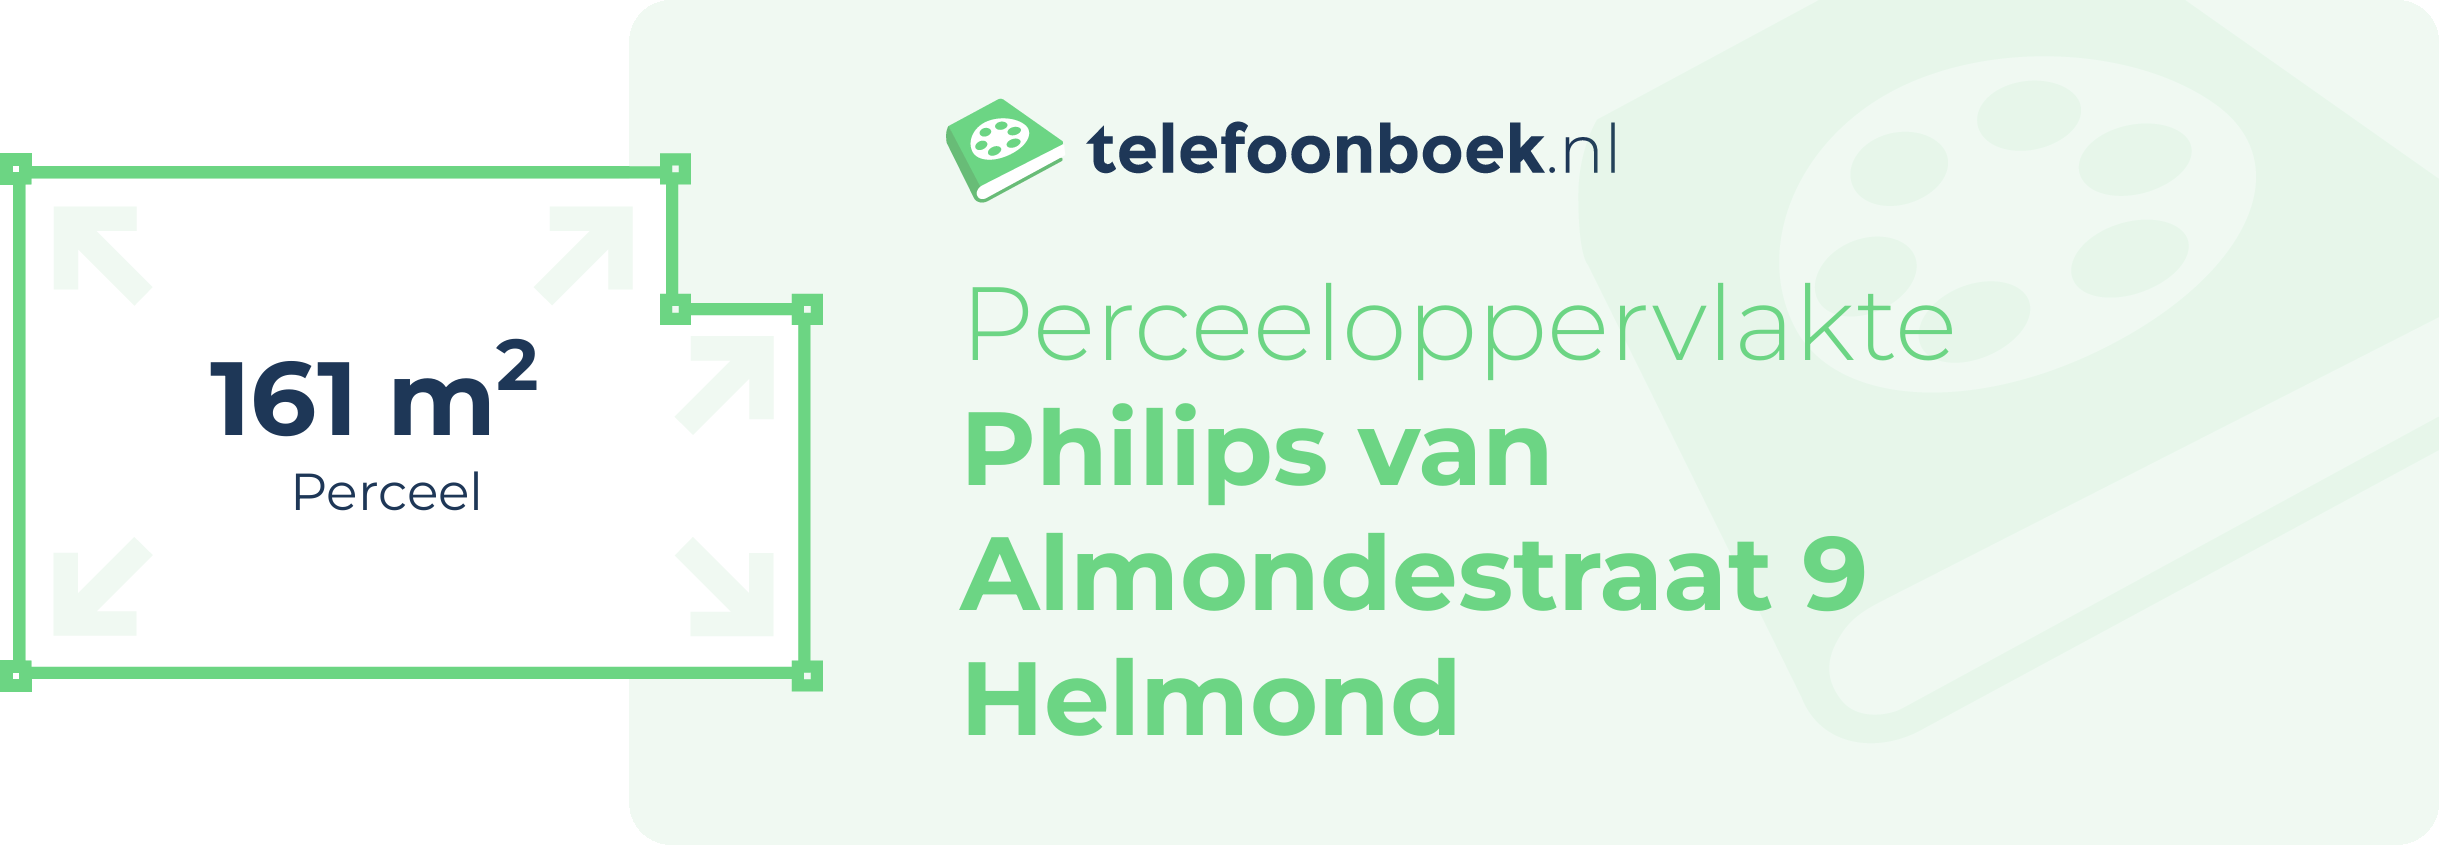 Perceeloppervlakte Philips Van Almondestraat 9 Helmond